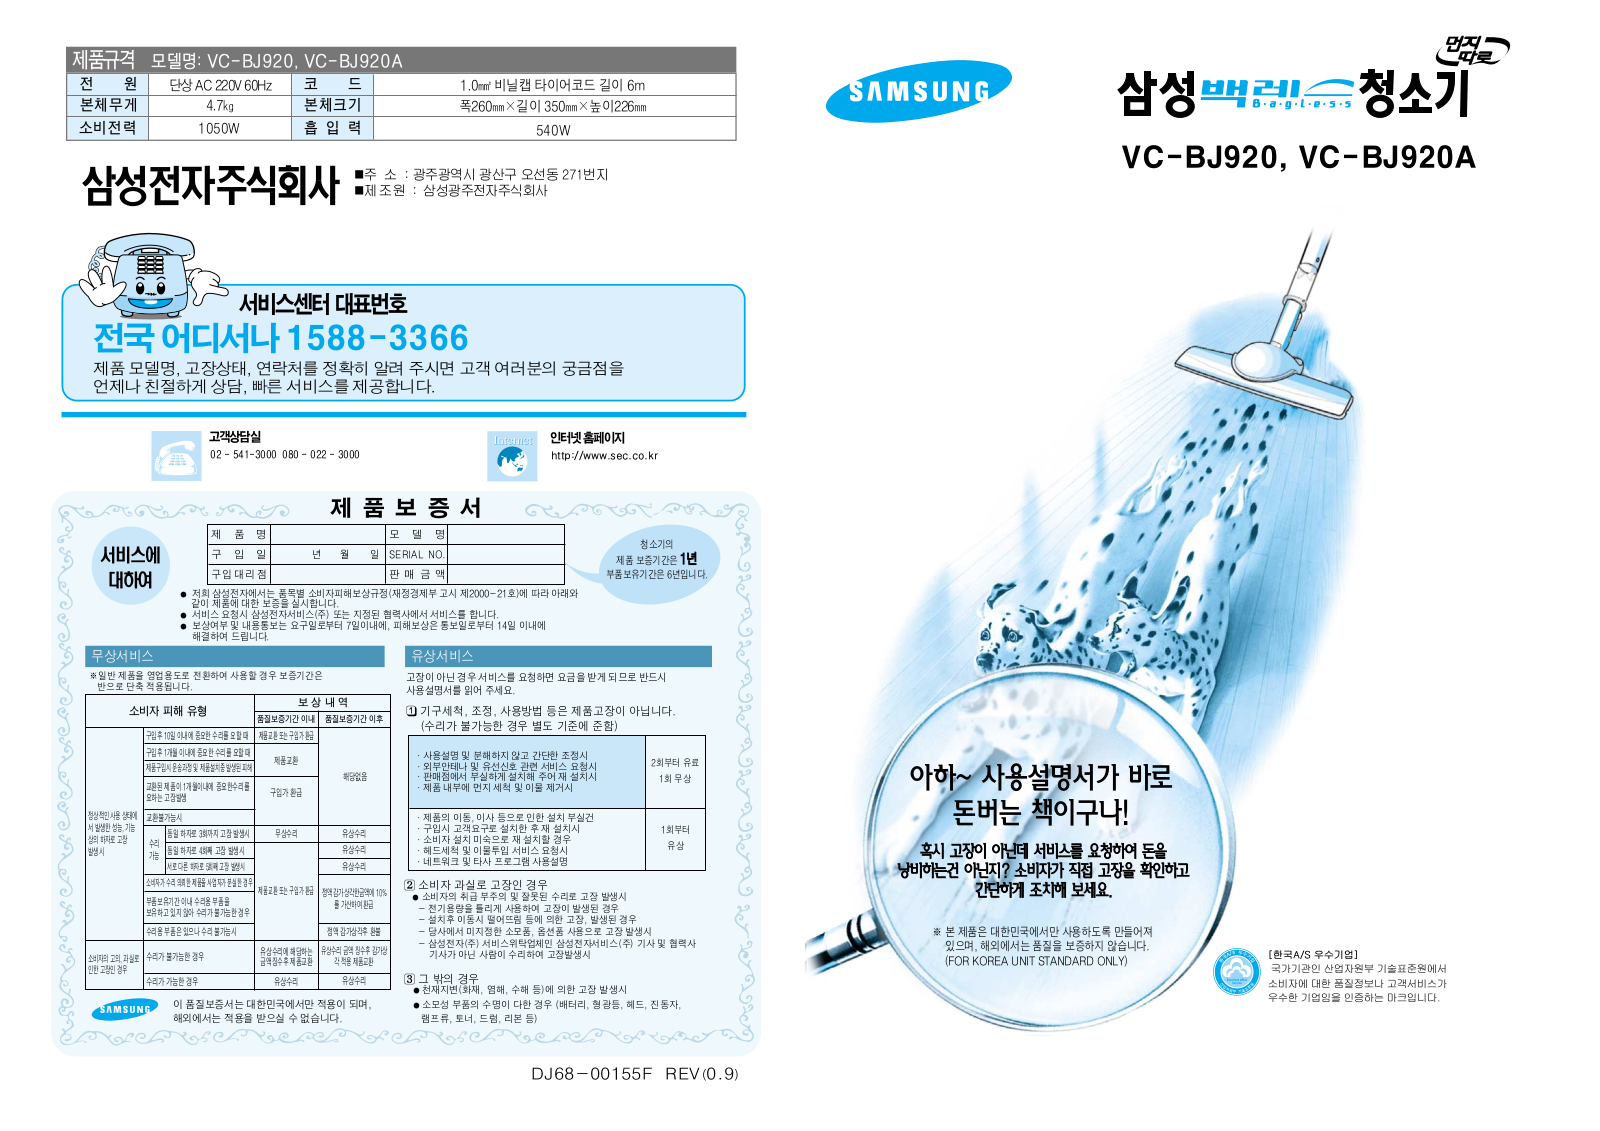 Samsung VC-BJ920A, VC-BJ920 User Manual